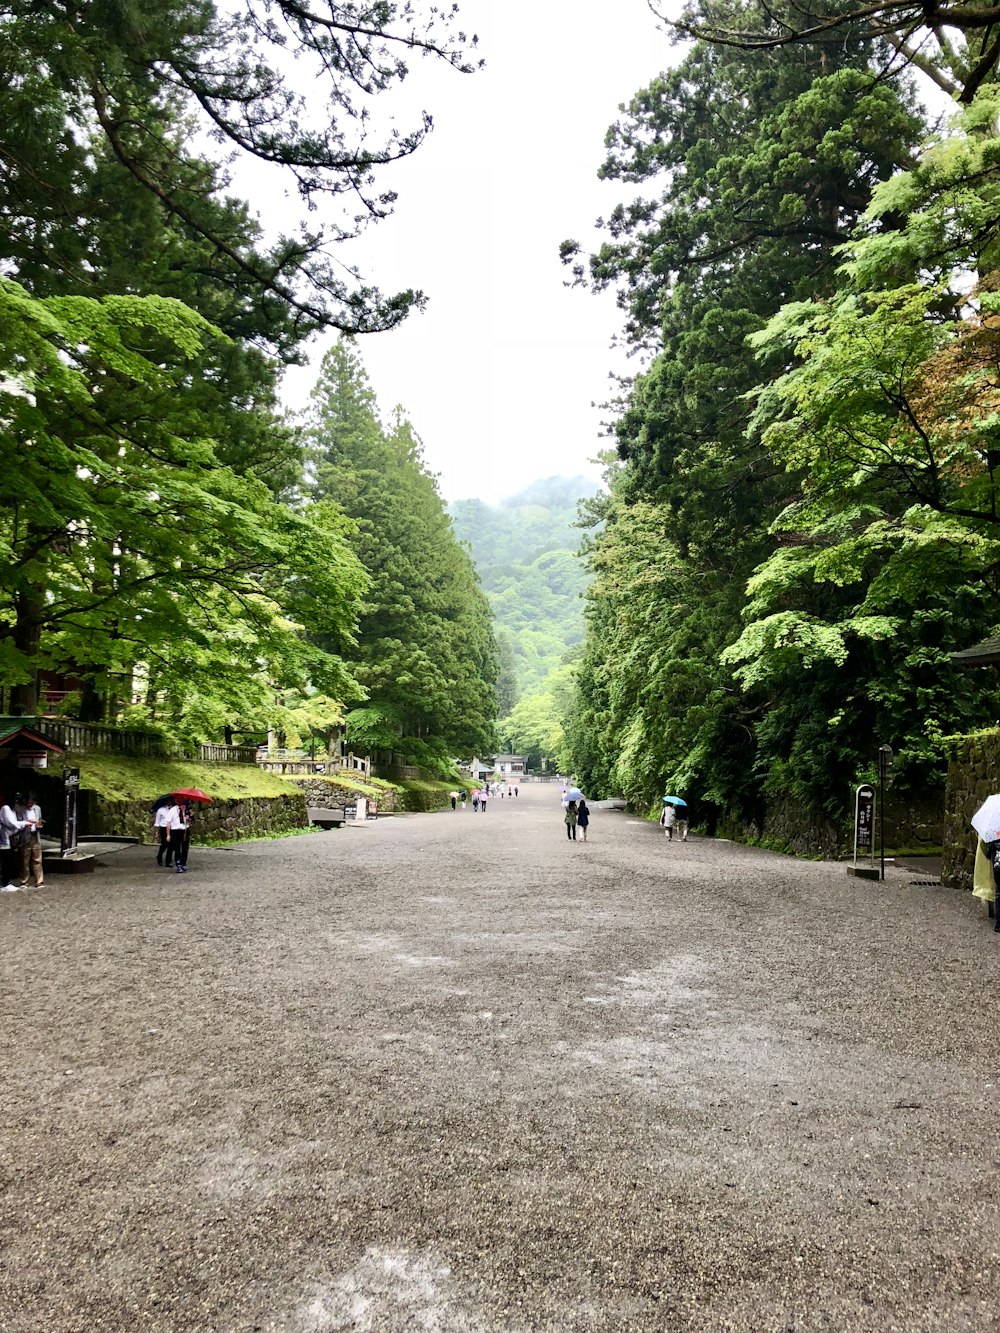 people walking on pathway between green trees during daytime